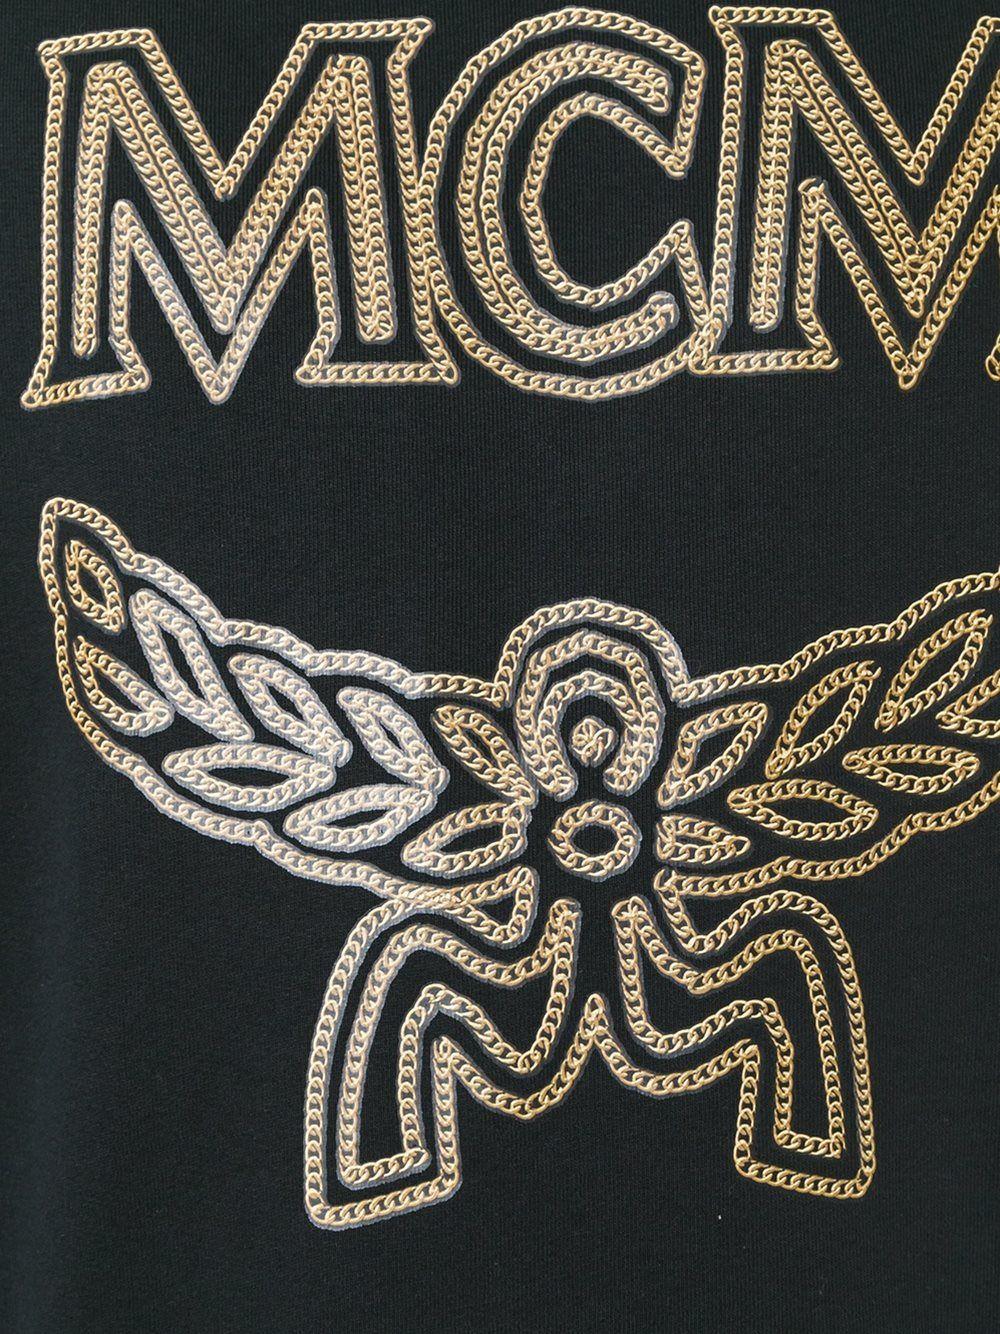 MCM Clothing Logo - MCM logo print sweatshirt Unisex Clothing,mcm beats earphones,100 ...